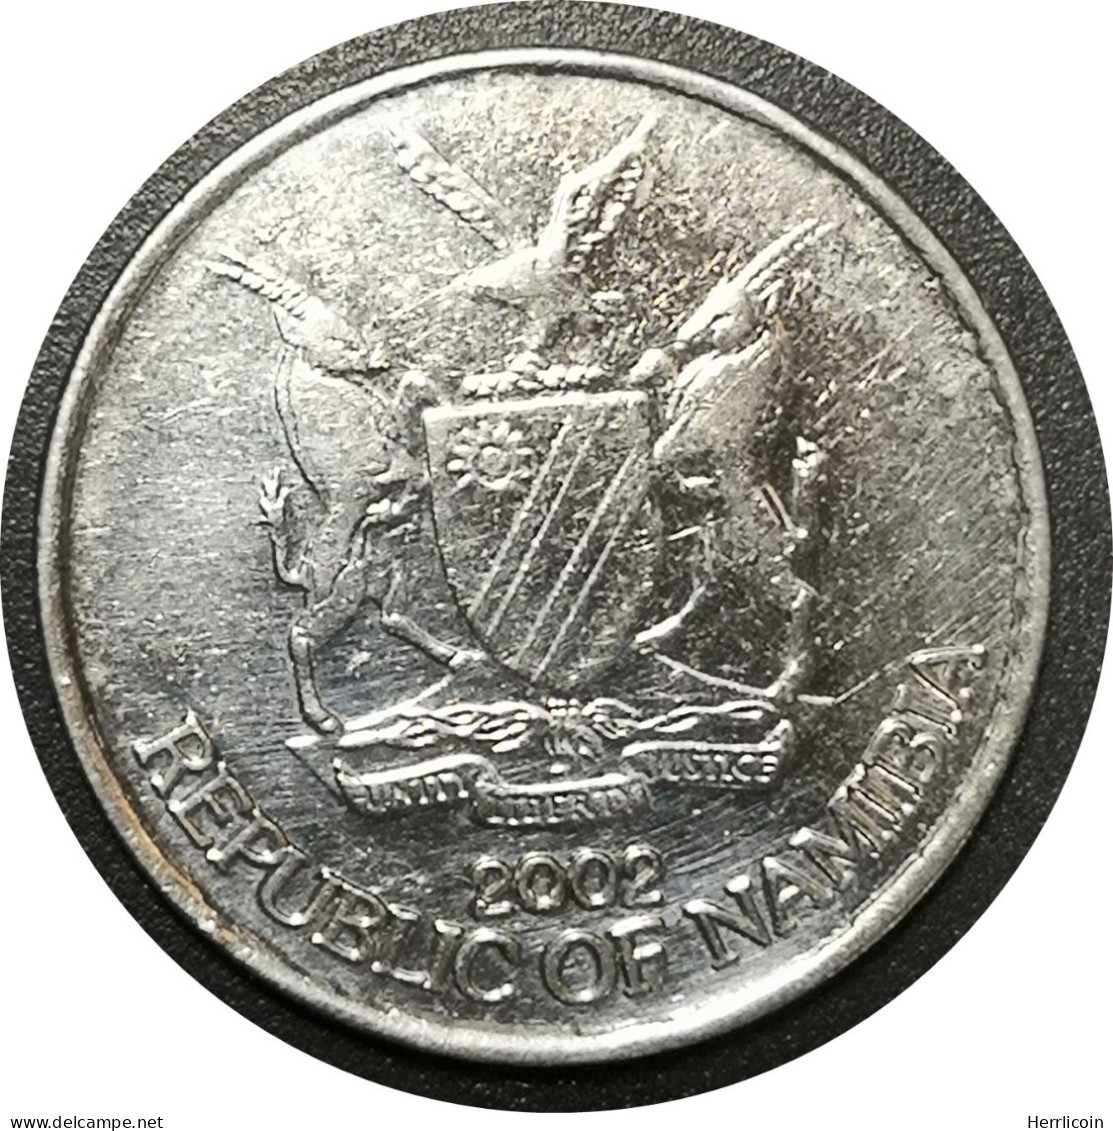 Monnaie Namibie - 2002 - 10 Cents - Namibie